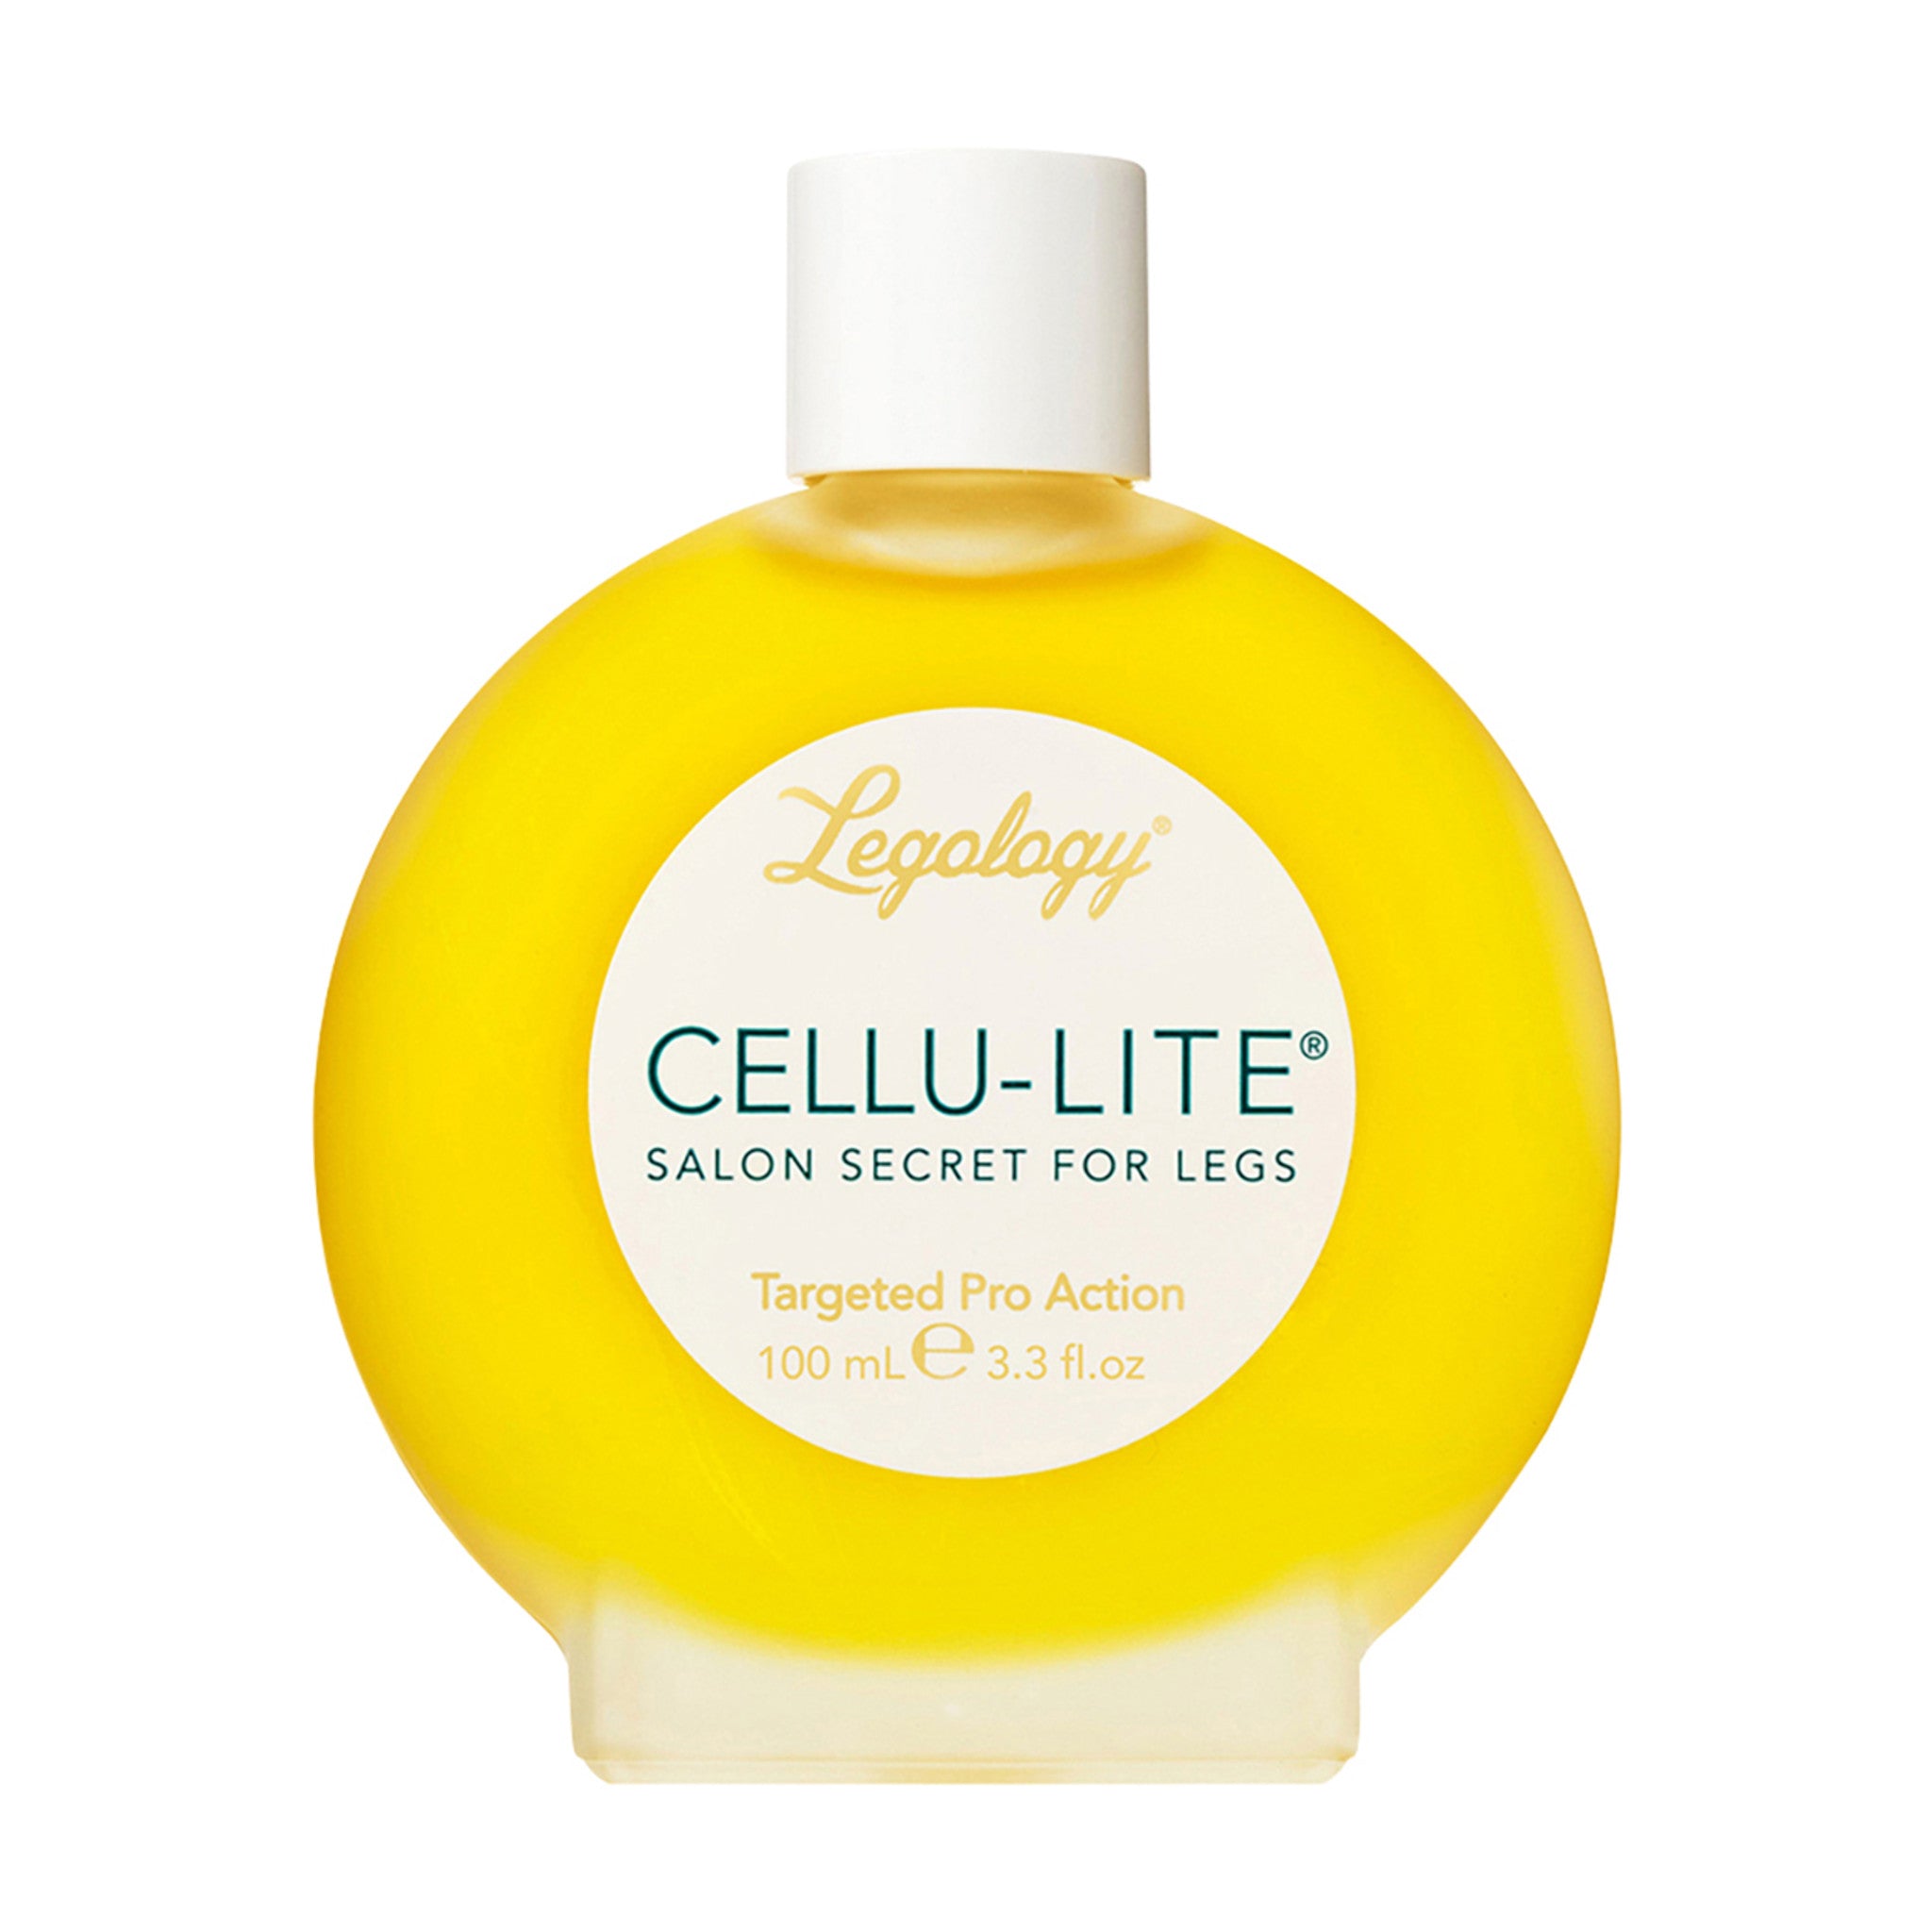 Cellu-Lite Salon Secret for Legs main image.